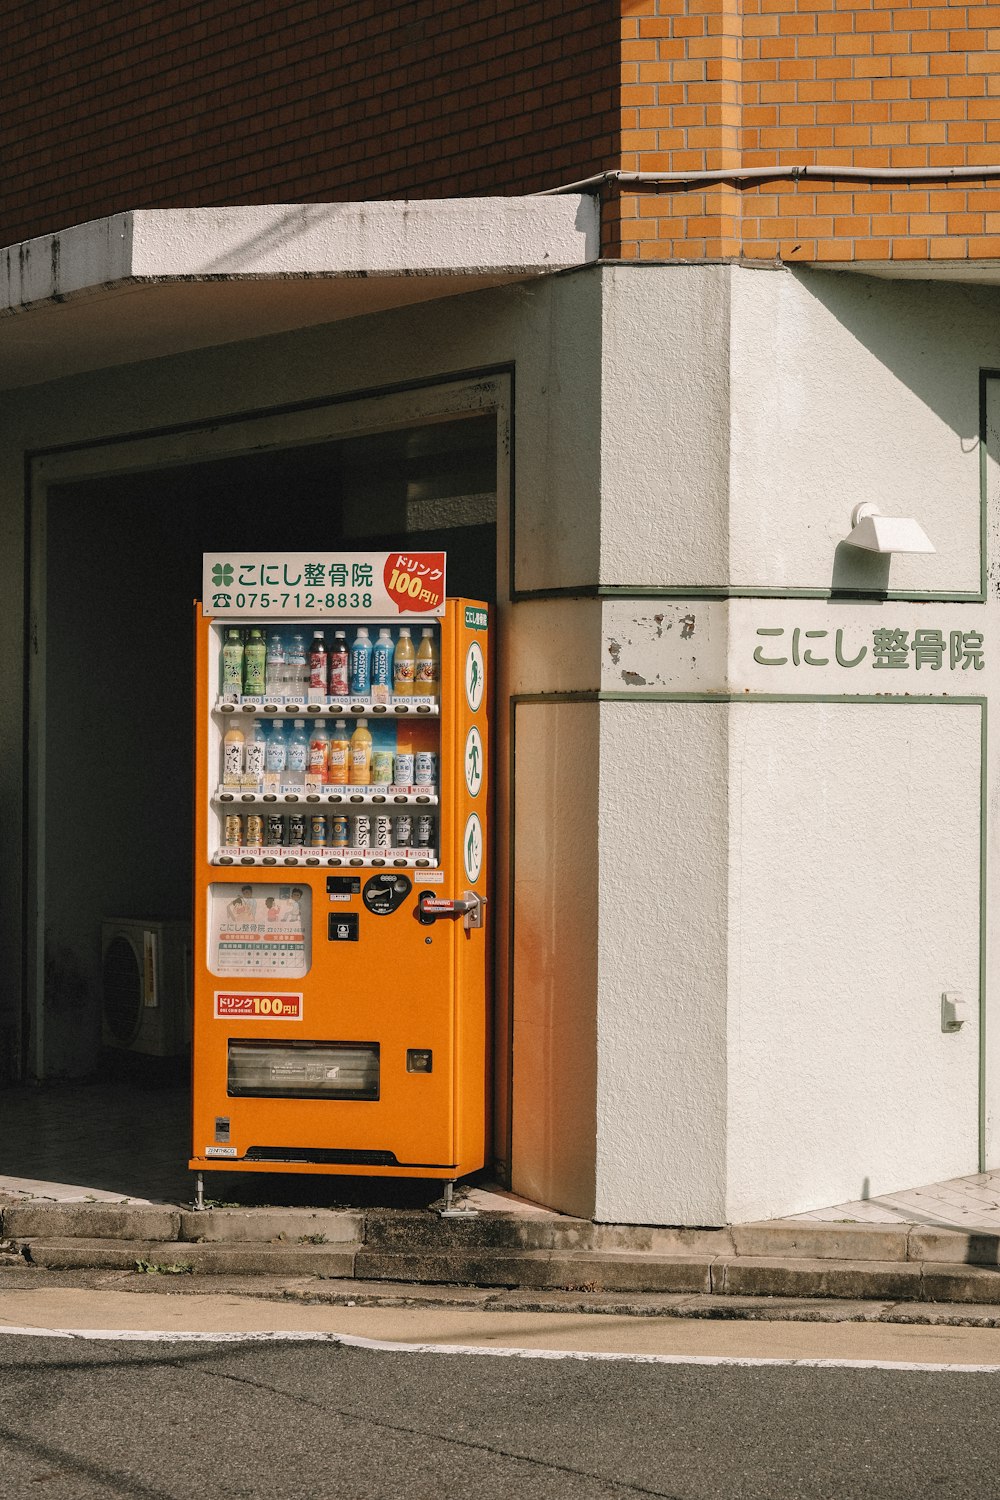 orange vending machine near building